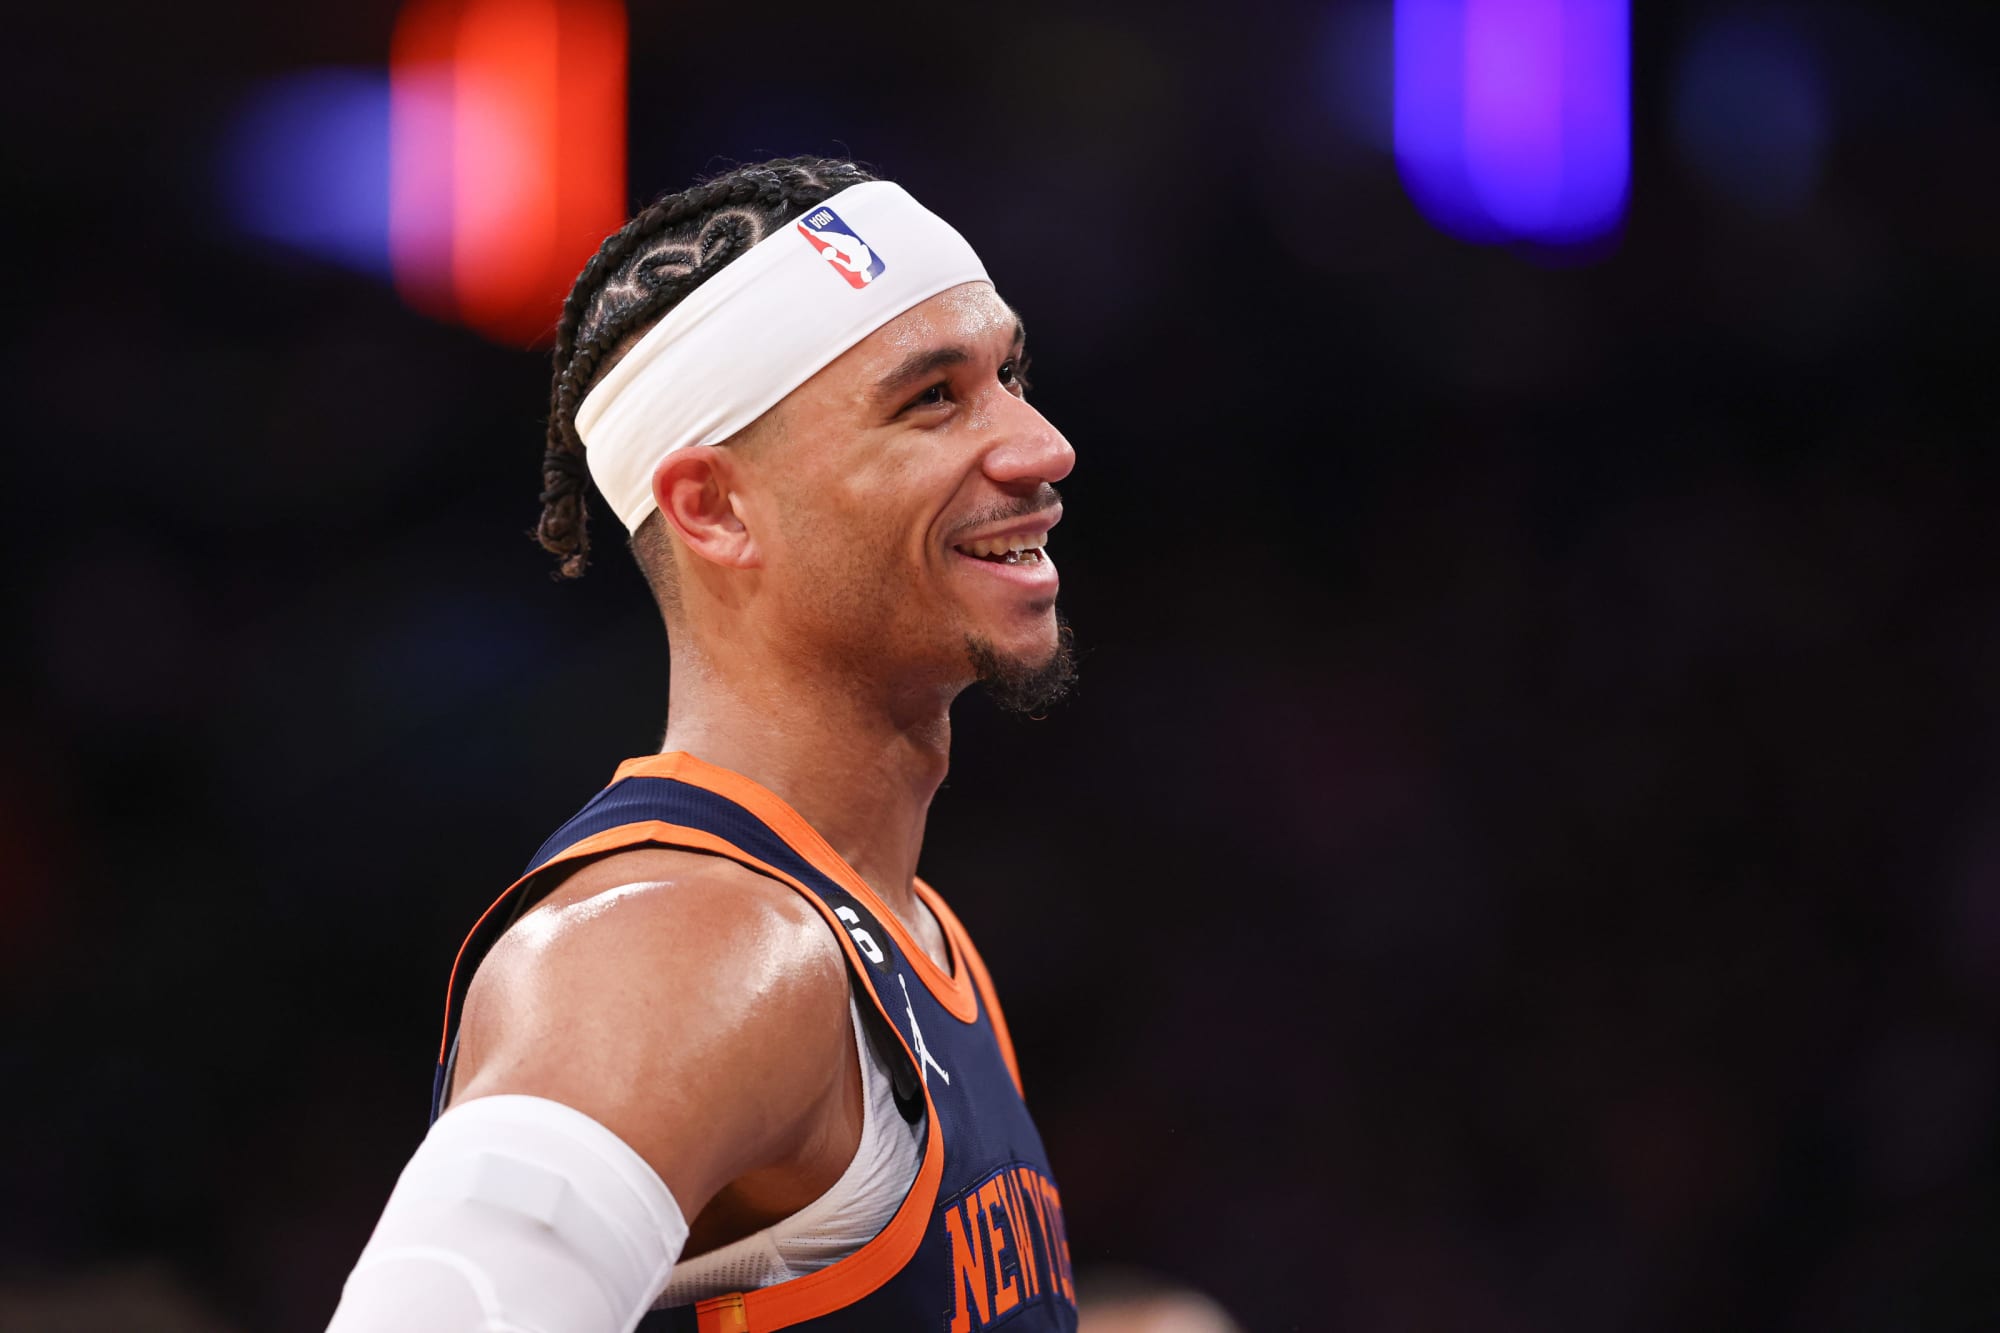 Josh Hart is loving life with the New York Knicks